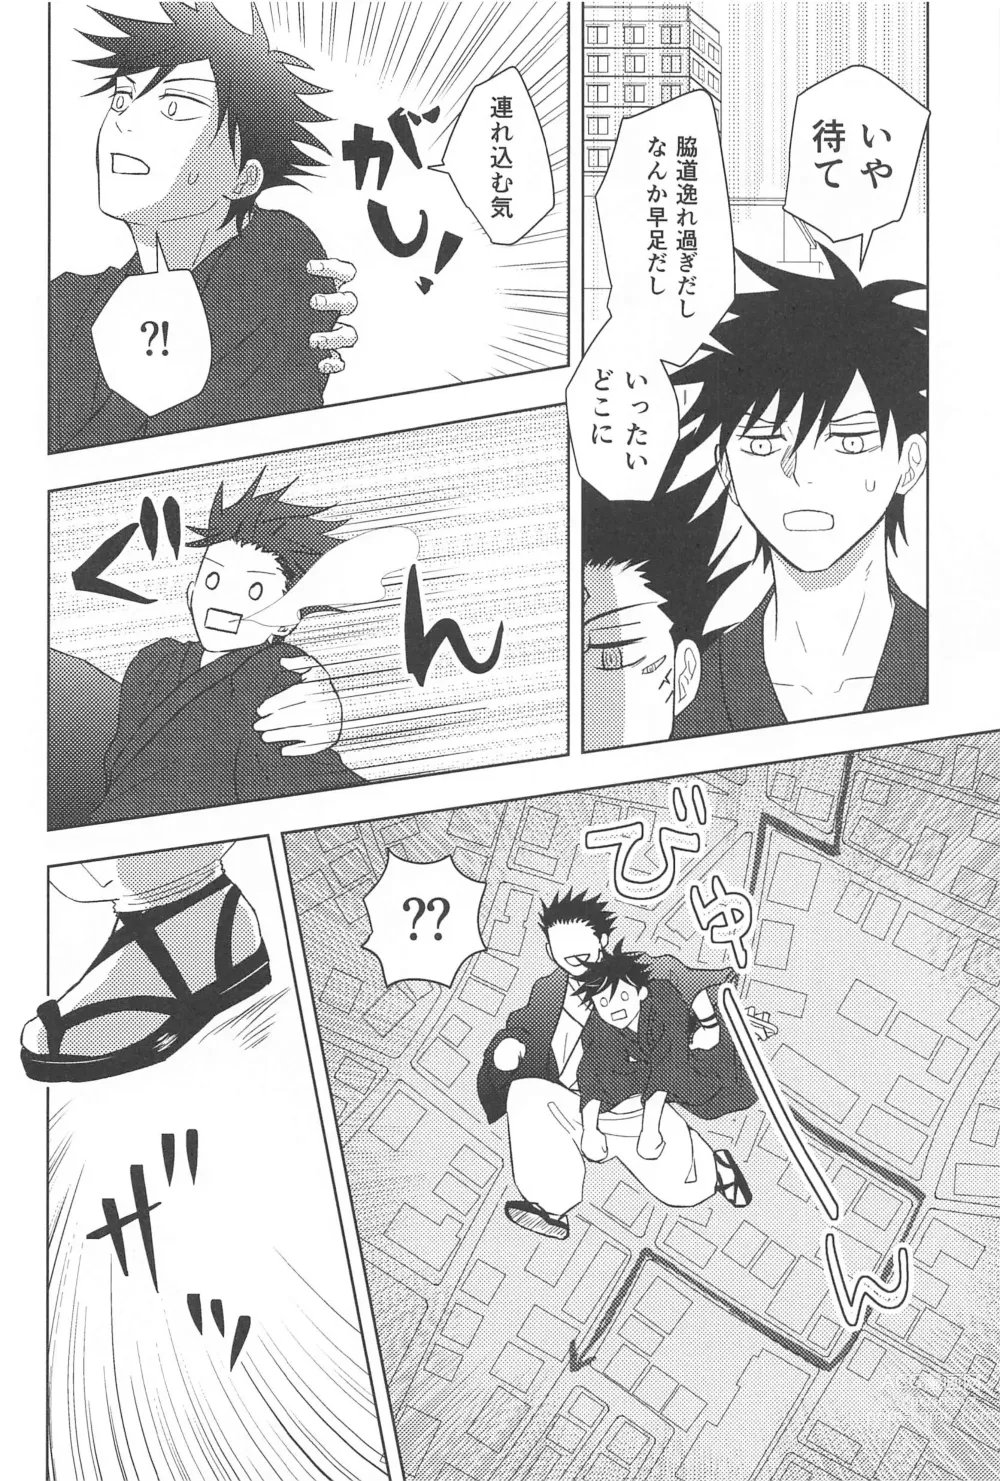 Page 14 of doujinshi Kakurega nite